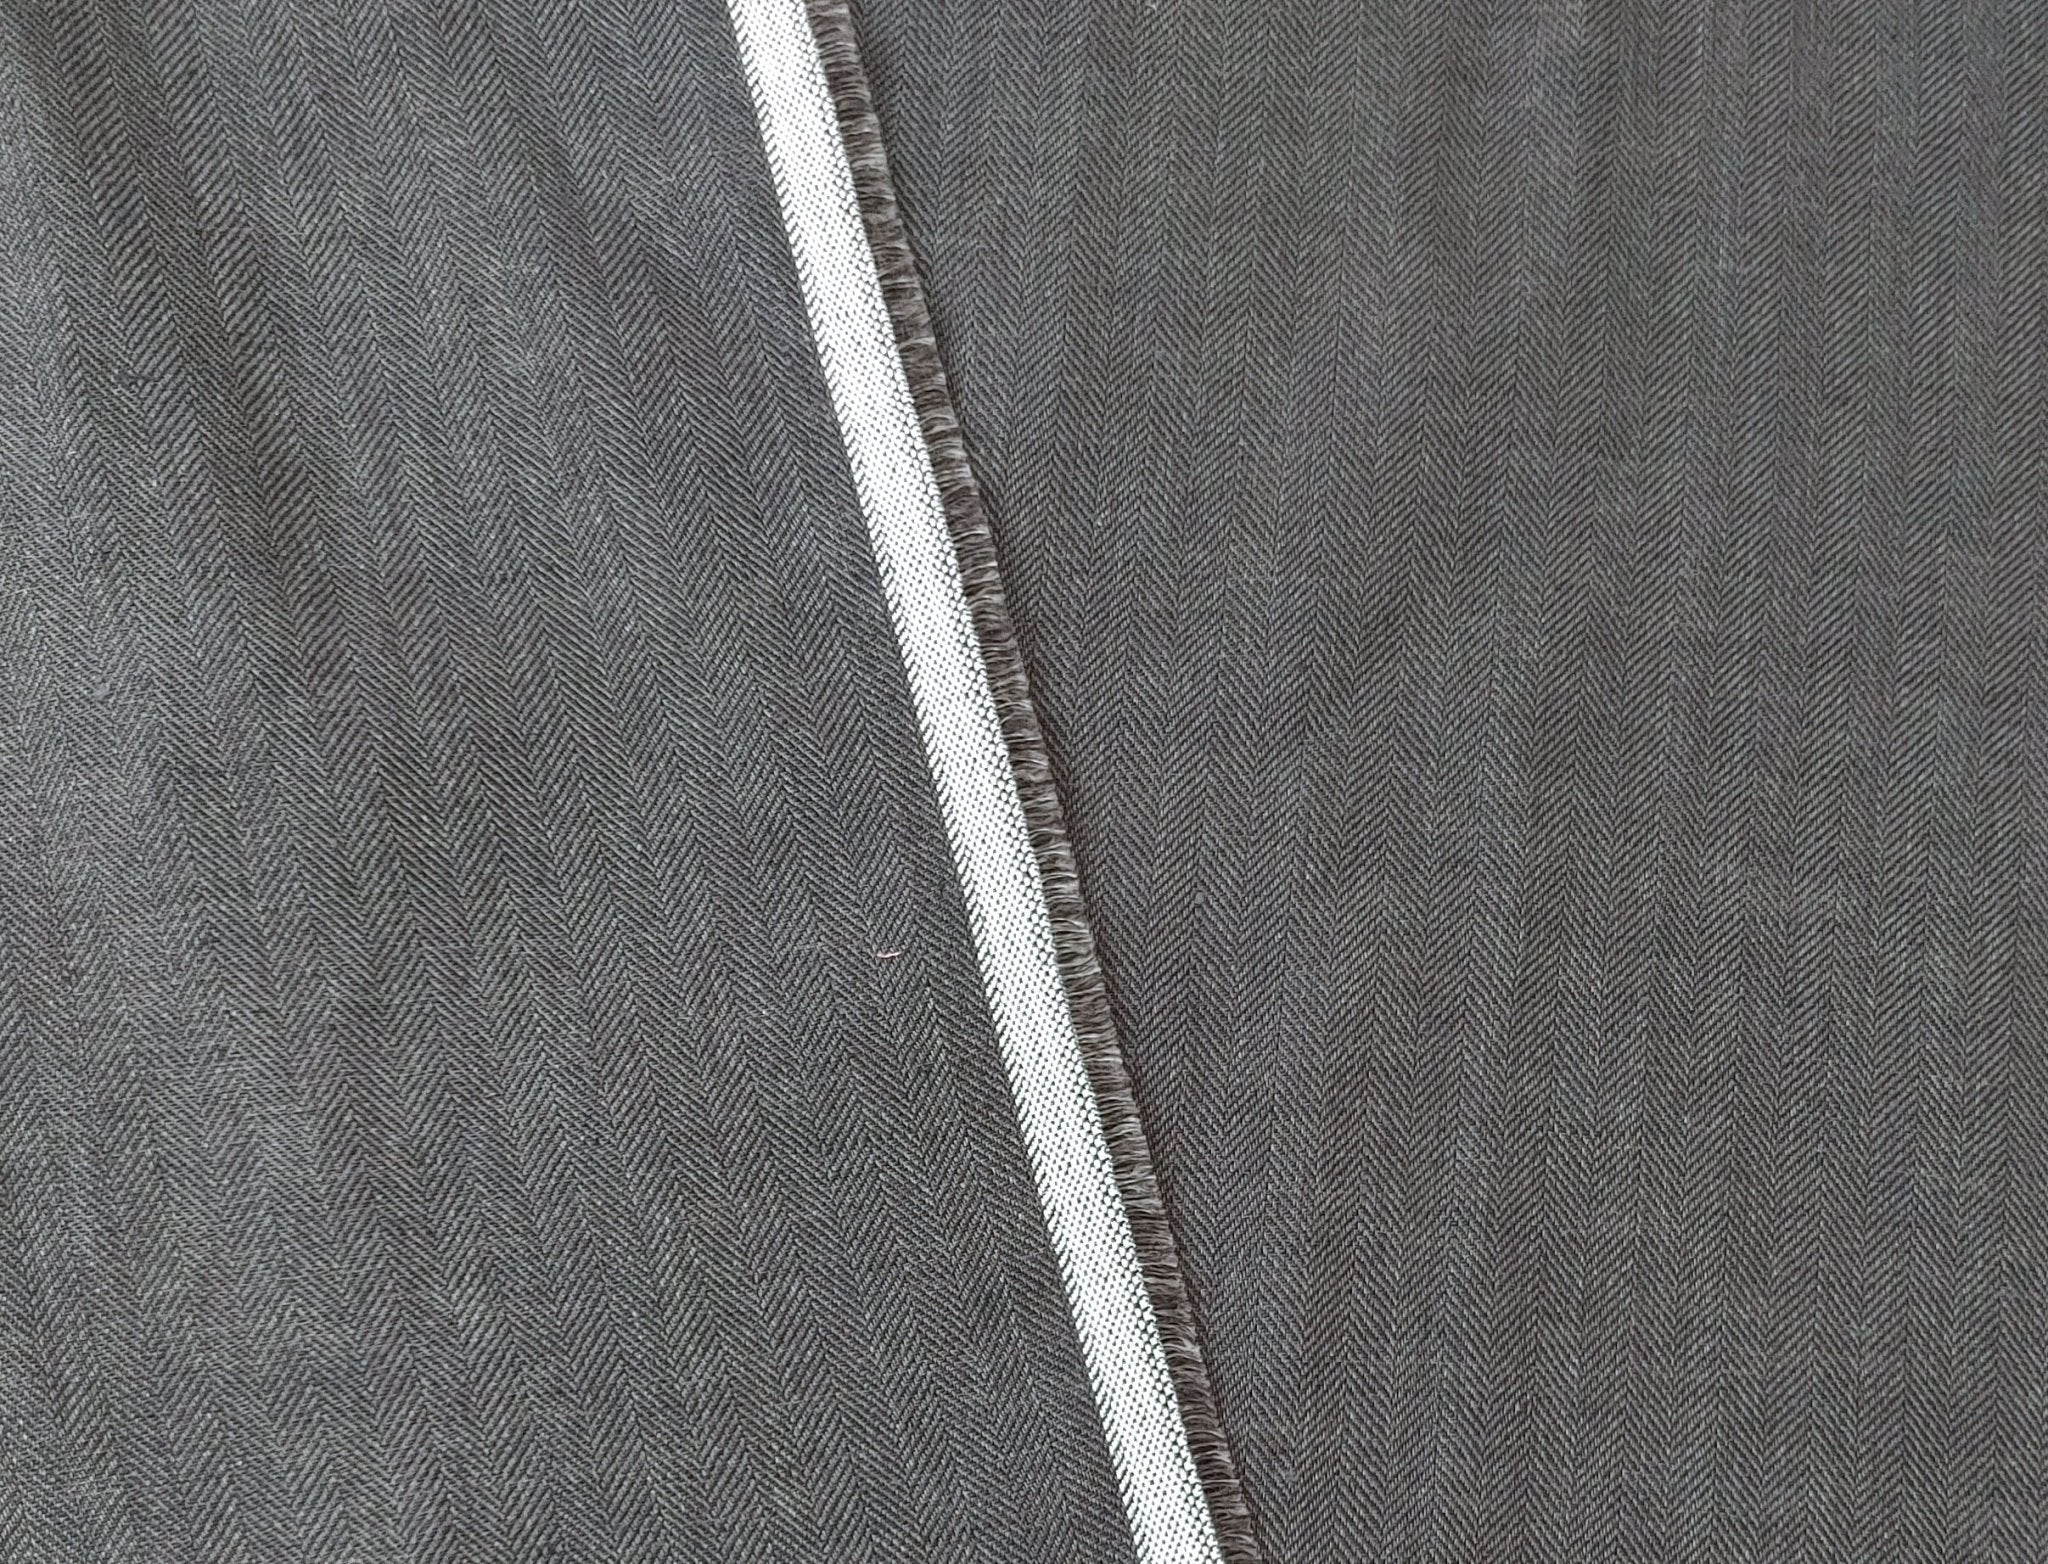 100% Linen Herringbone Twill HBT Fabric medium weight chambray 7313 7314 7727 7529 - The Linen Lab - Natural